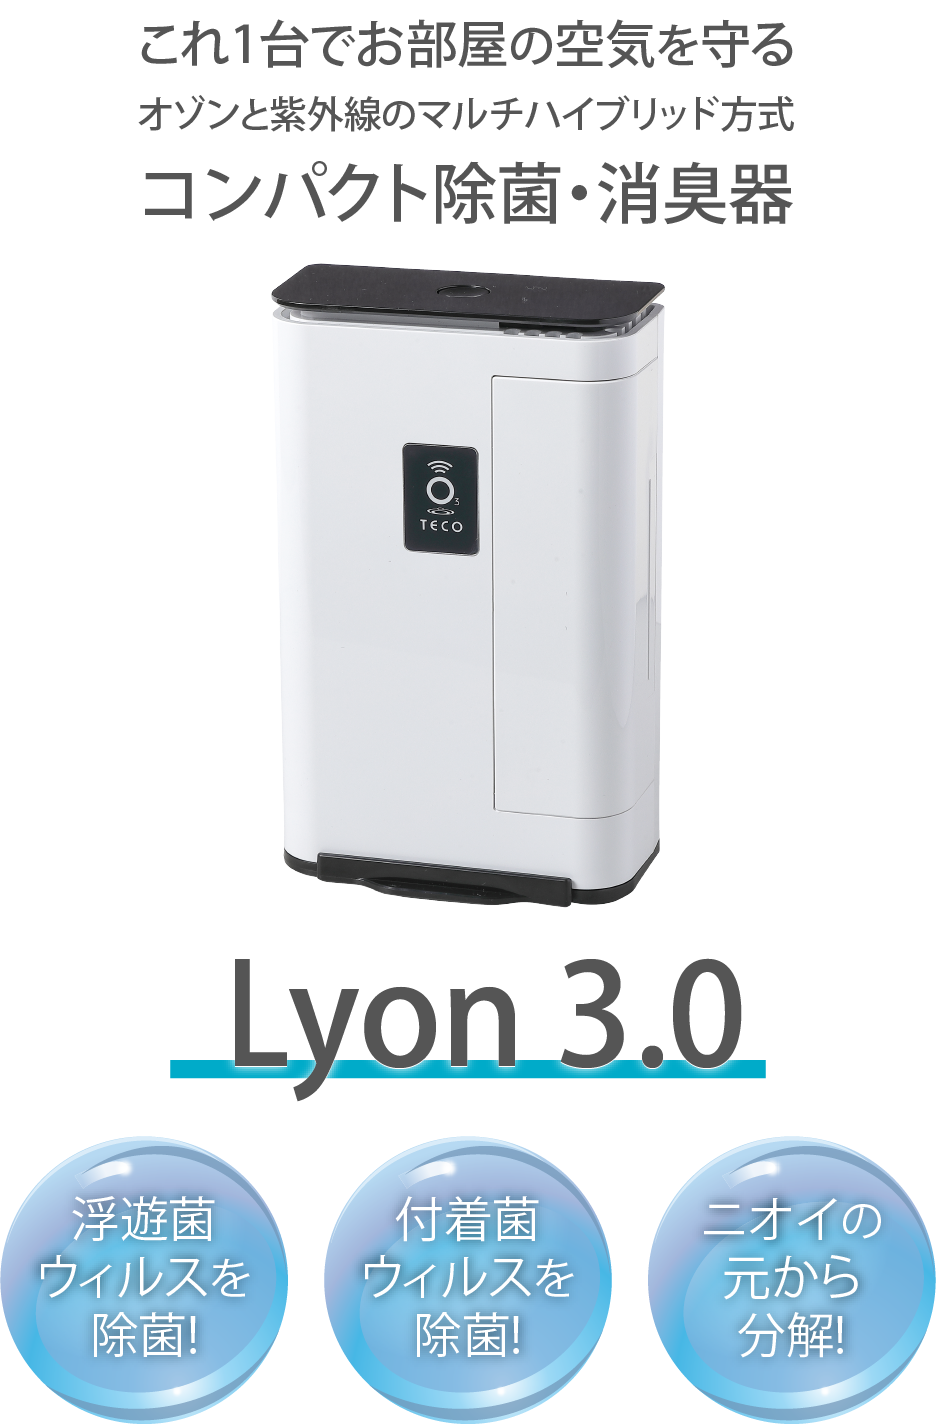 Lyon3.0】オゾン除菌国内導入実績20,000件以上 | HULL株式会社